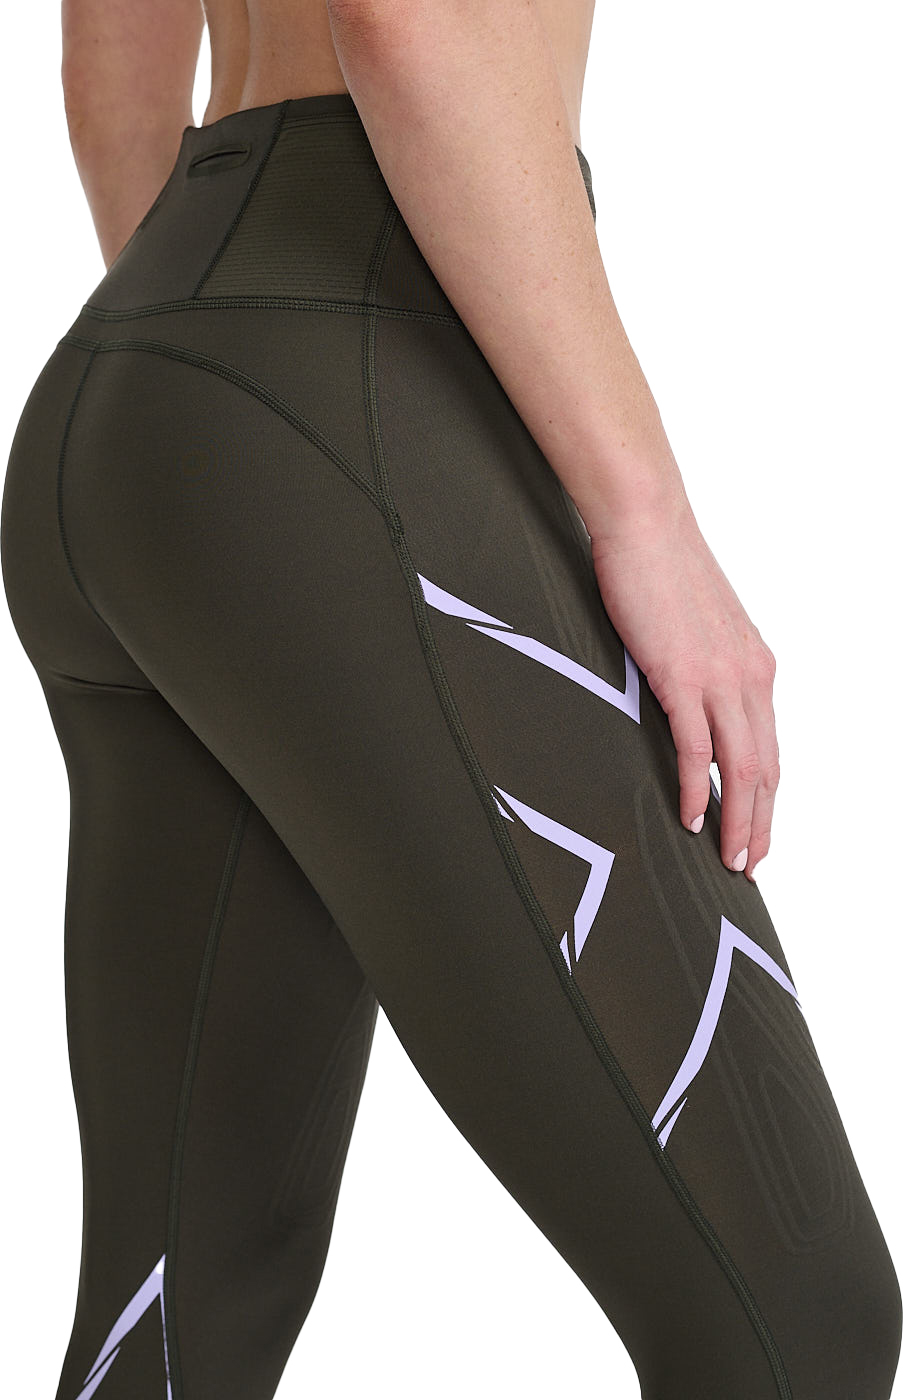 2XU Hi-rise Compression Tights-w – leggings & tights – shop at